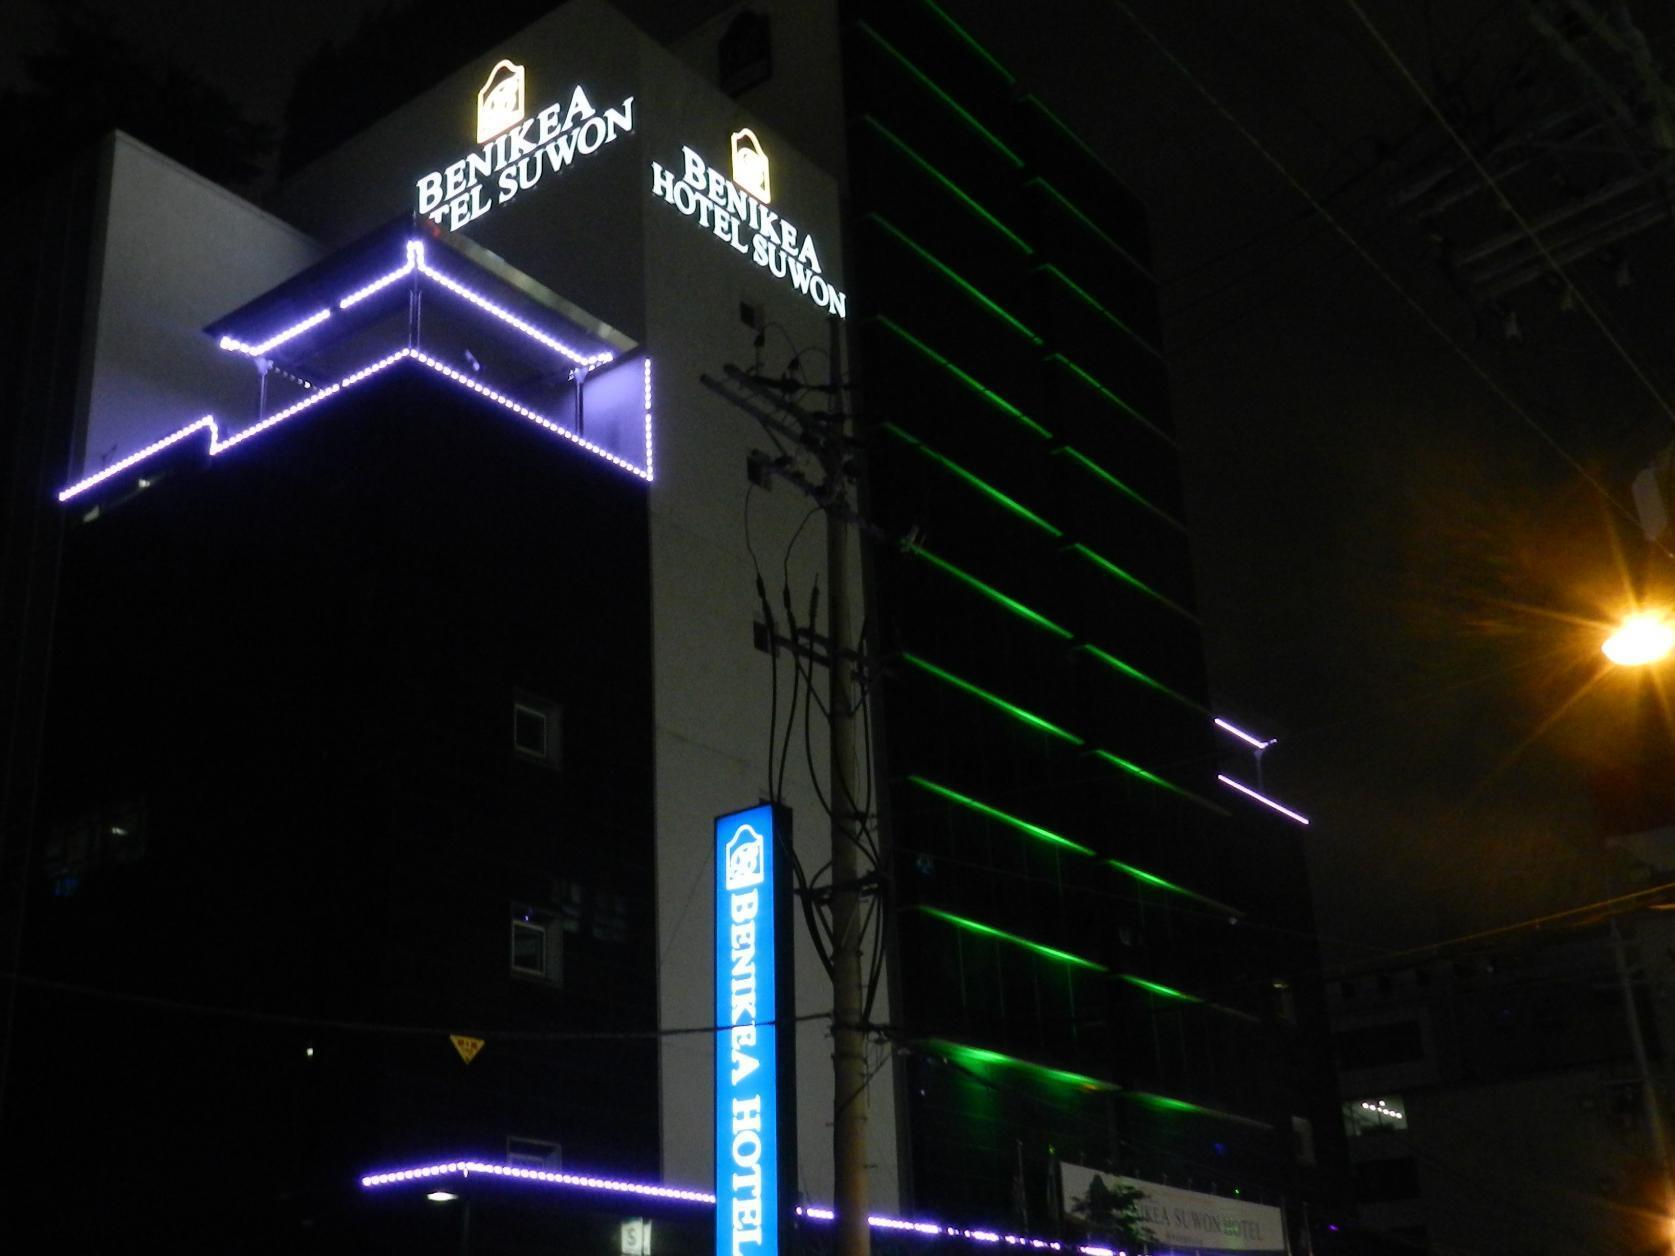 Benikea Hotel スウォン エクステリア 写真